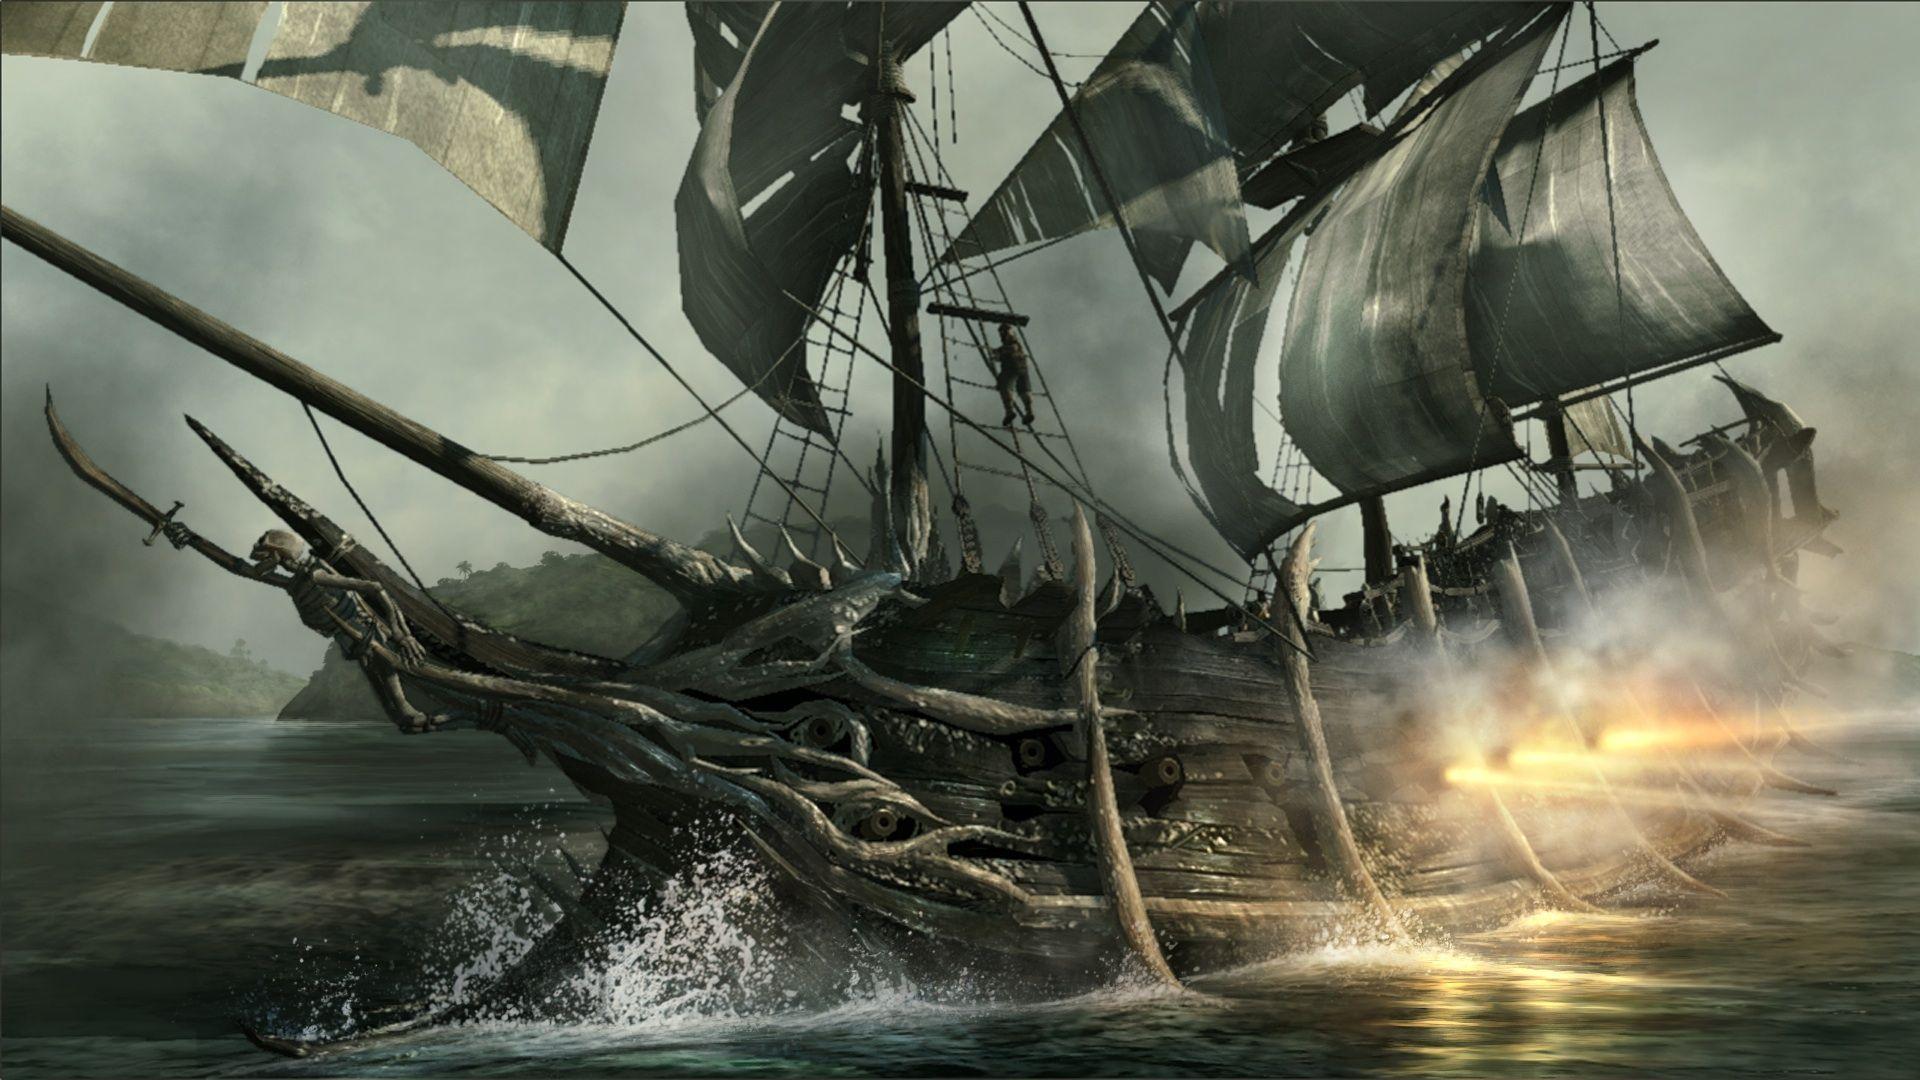 Pirate Ship Wallpaper for Desktop